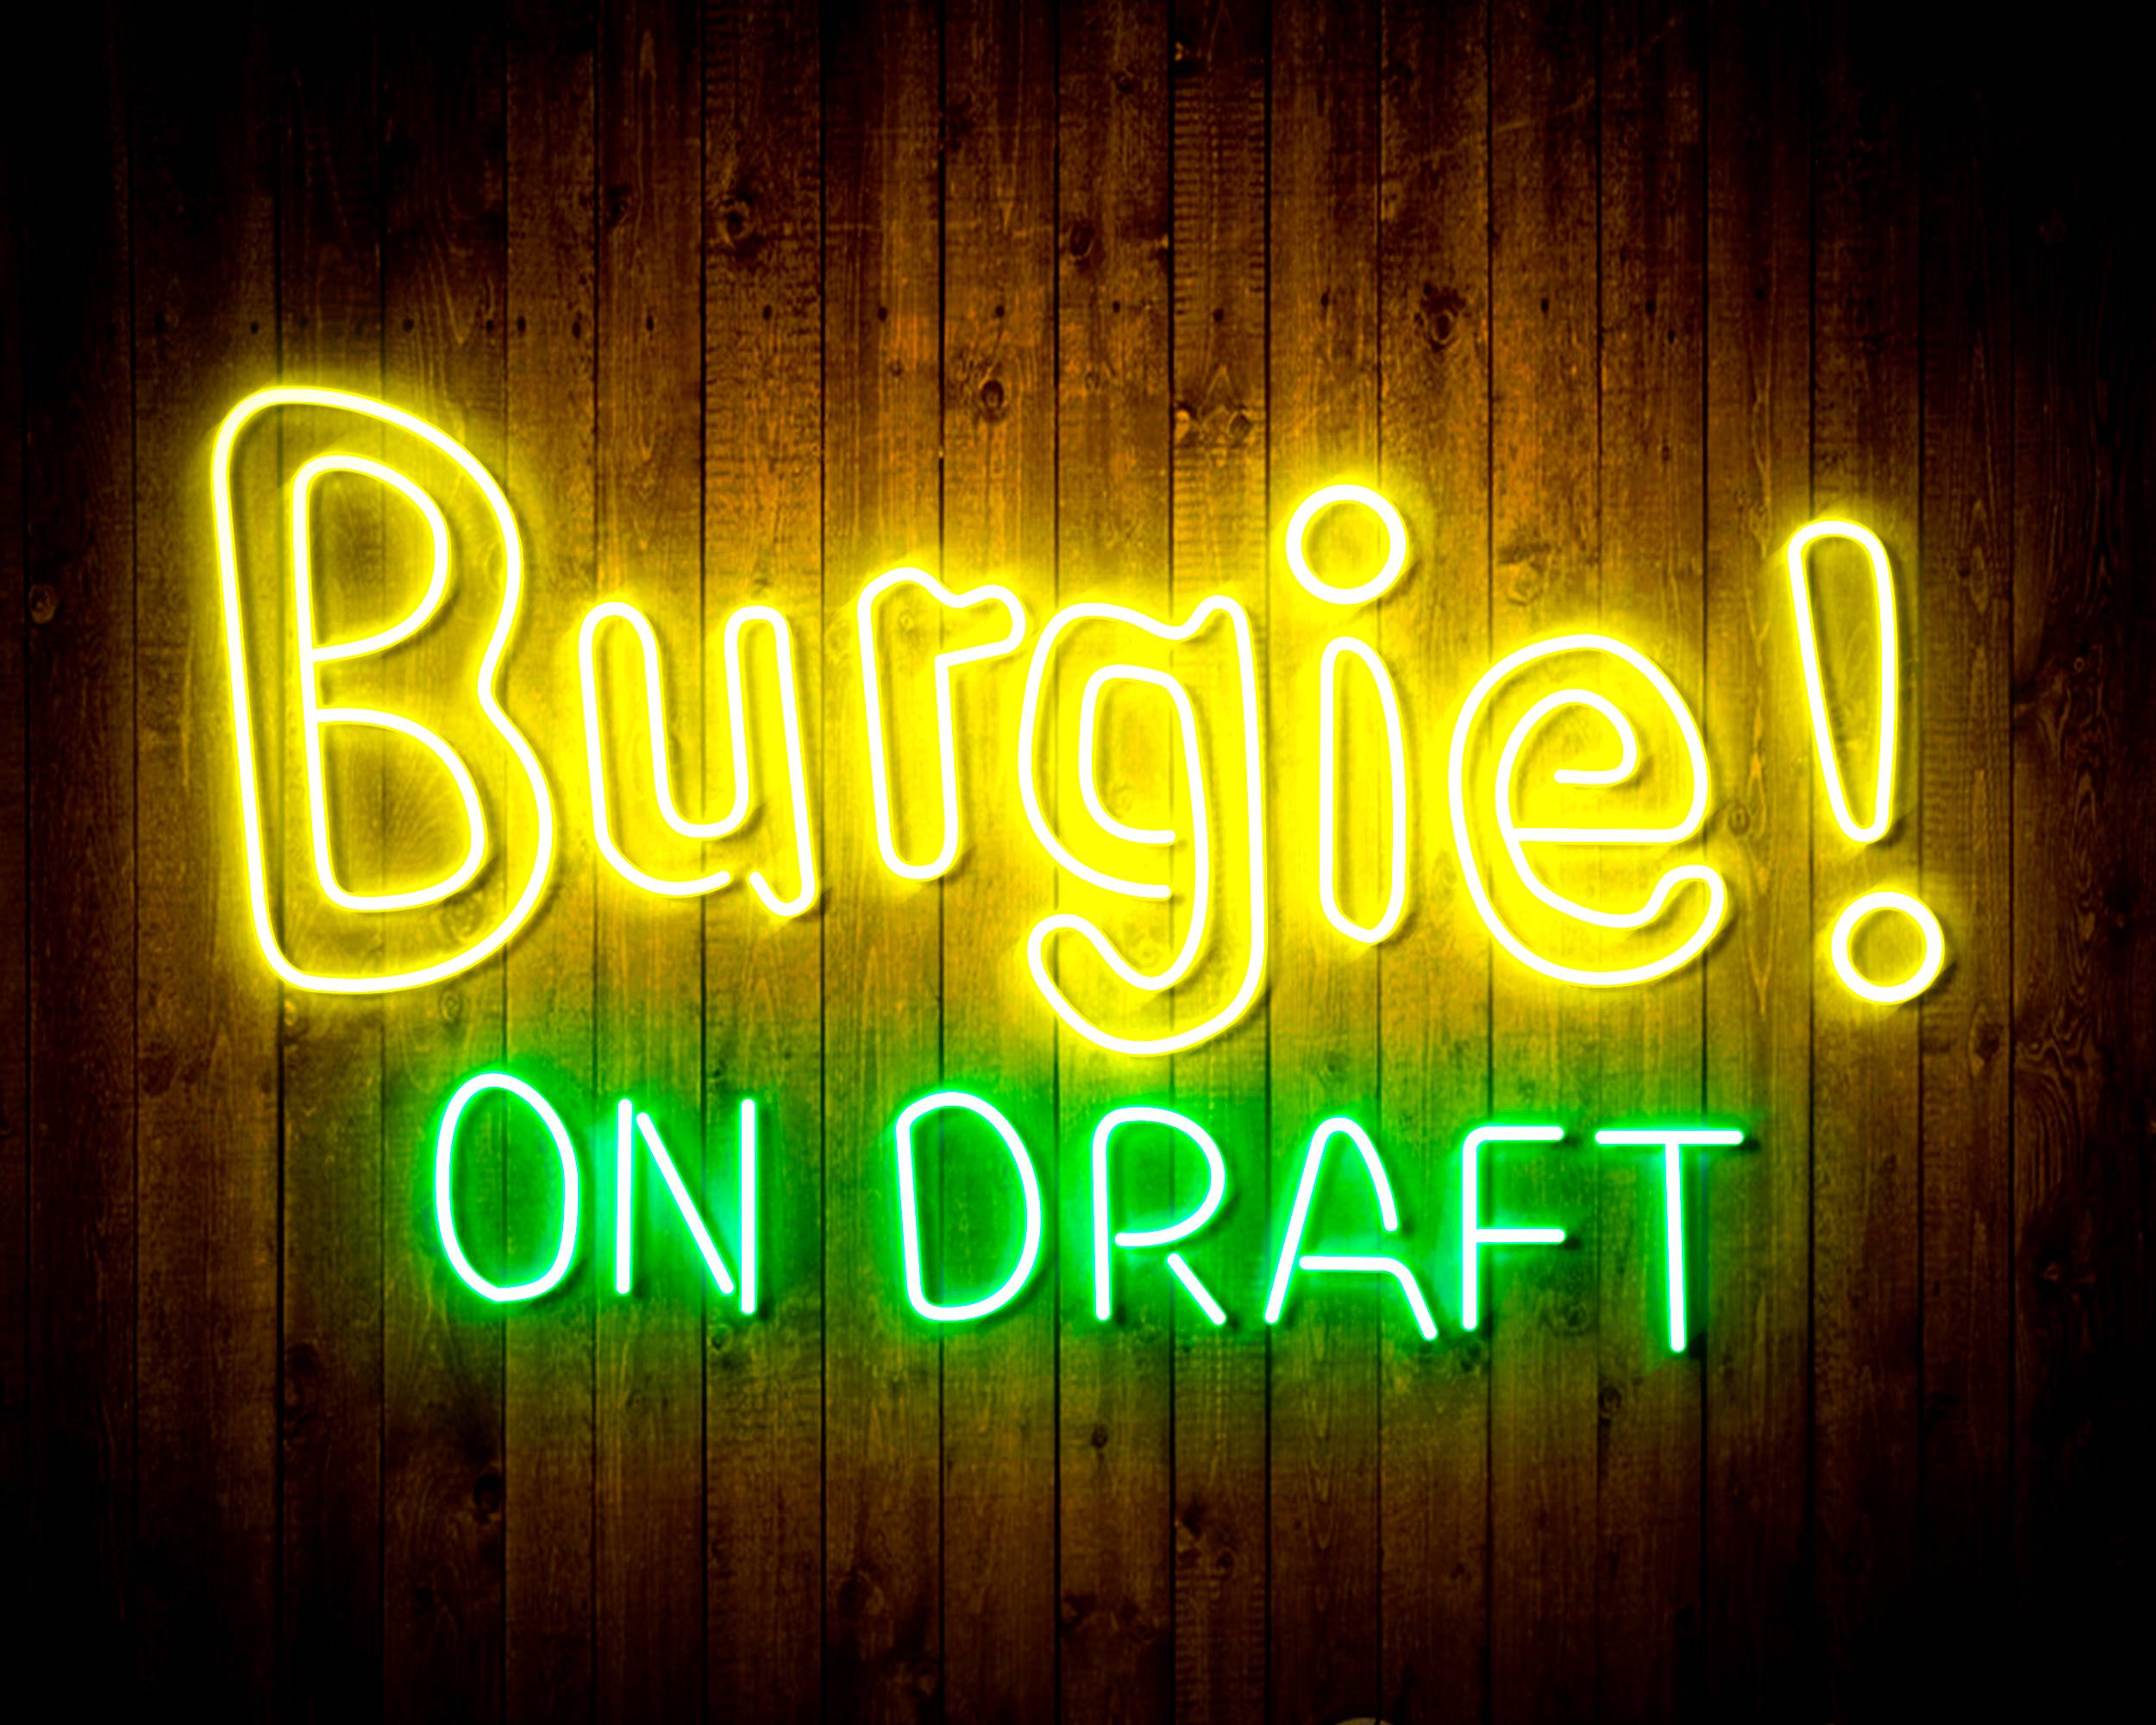 Burgie! On Draft Handmade Neon Flex LED Sign